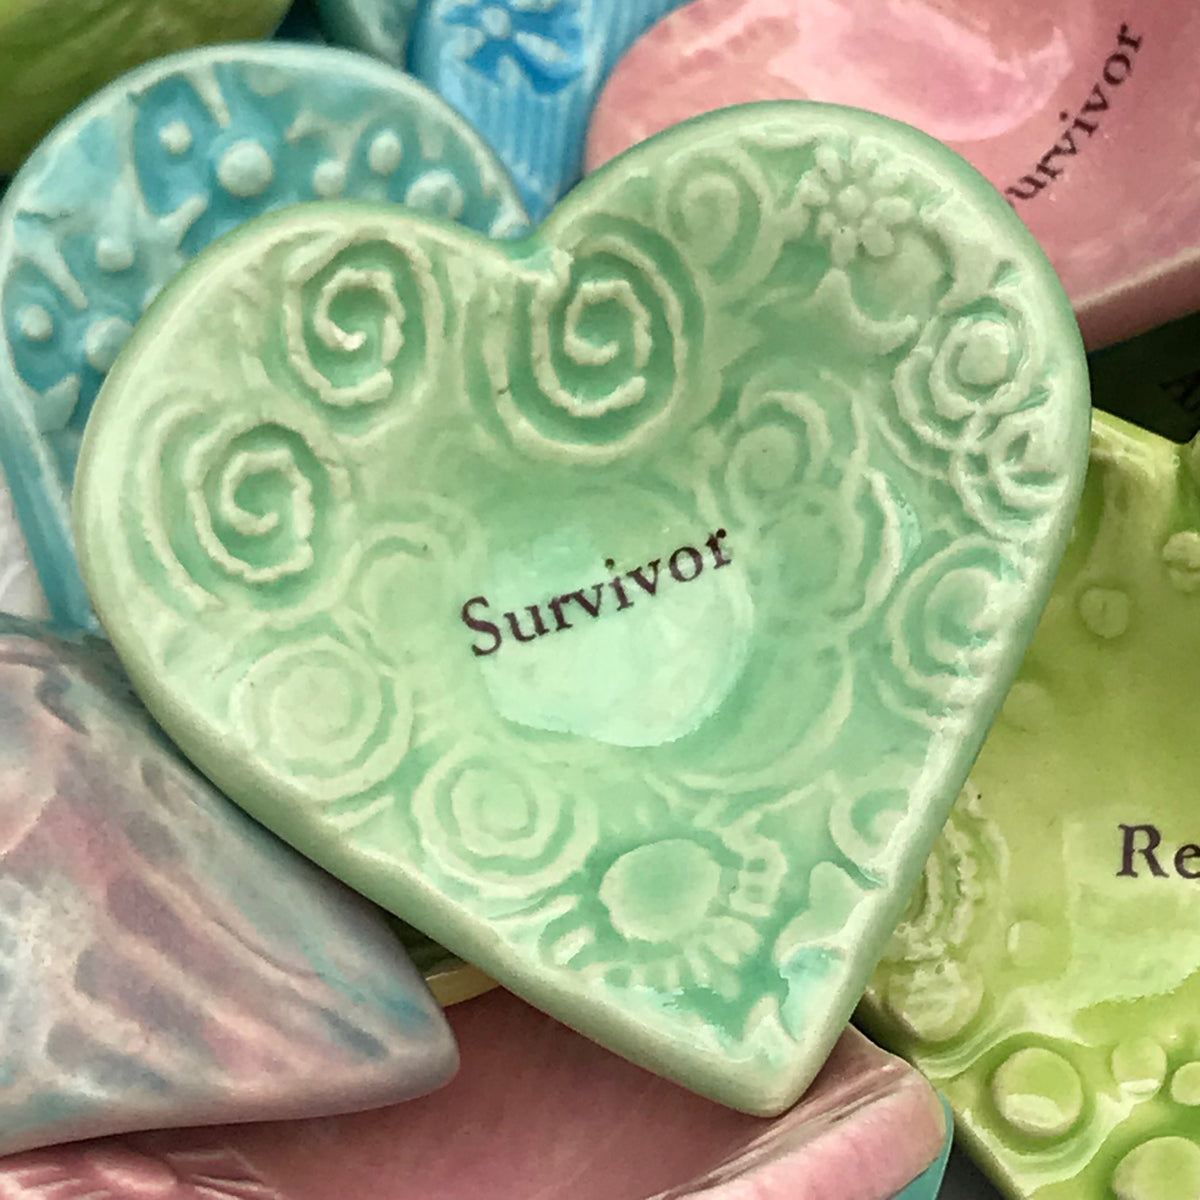 Giving Heart "Survivor"